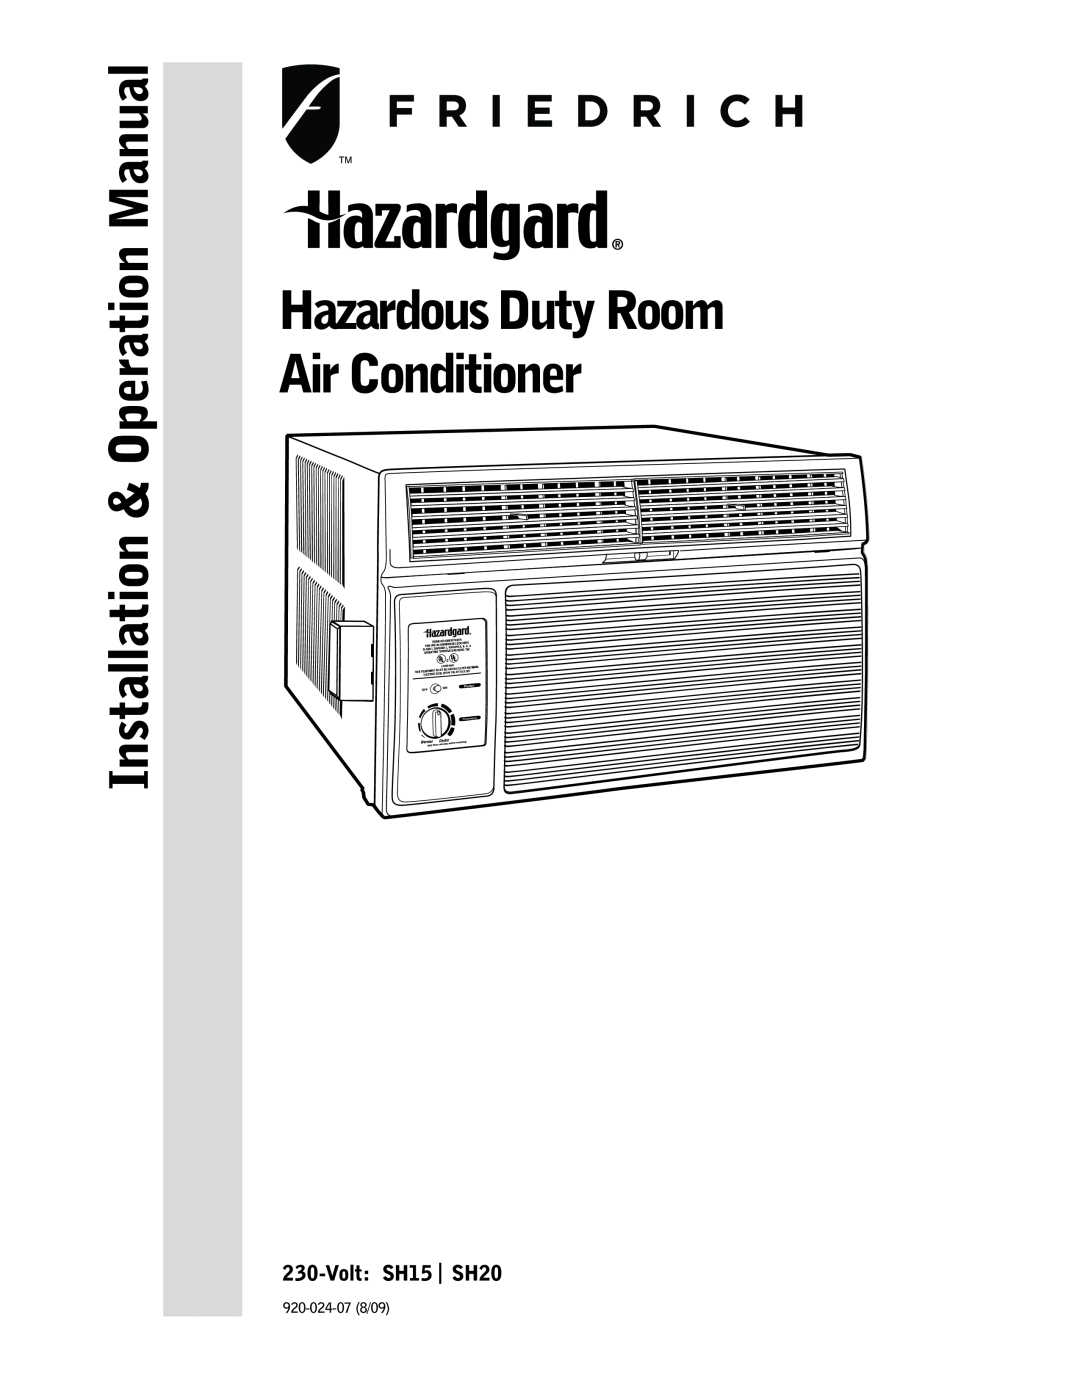 Friedrich operation manual Hazardous Duty Room Air Conditioner, Volt:SH15 | SH20, 920-024-05 